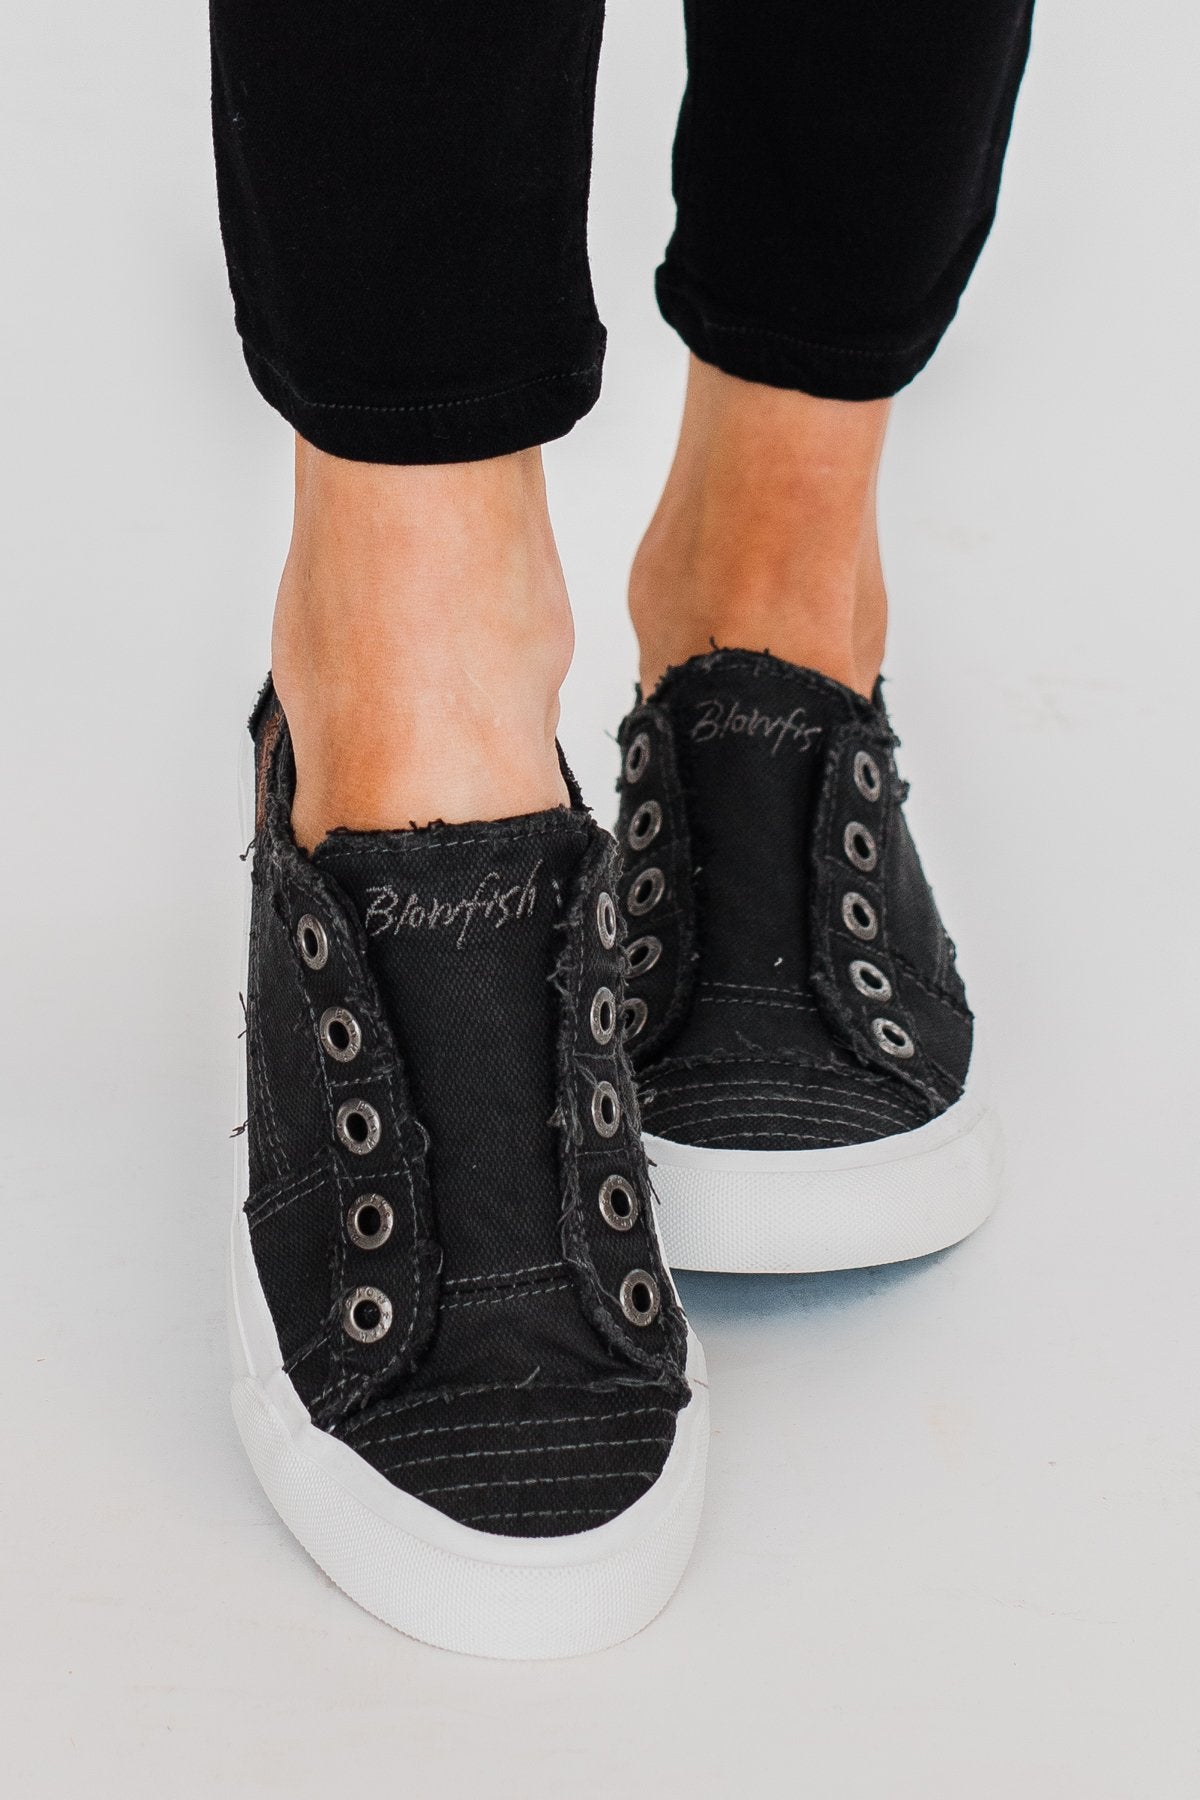 Blowfish Play Sneakers- Black Smoked